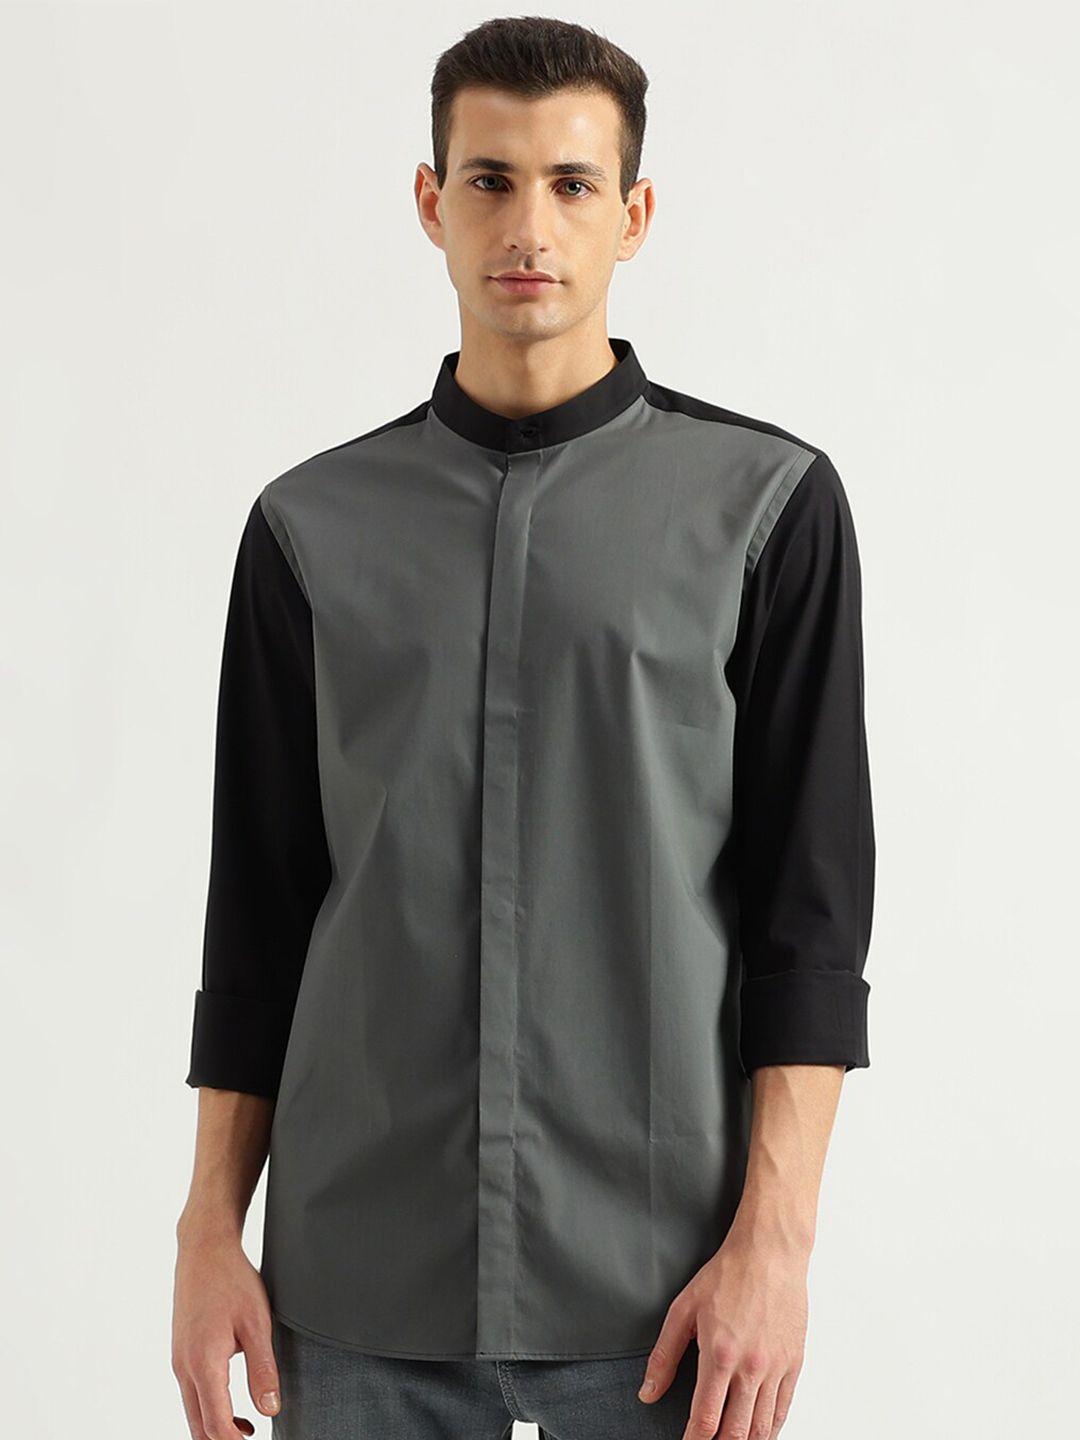 united-colors-of-benetton-slim-fit-colourblocked-mandarin-collar-cotton-casual-shirt